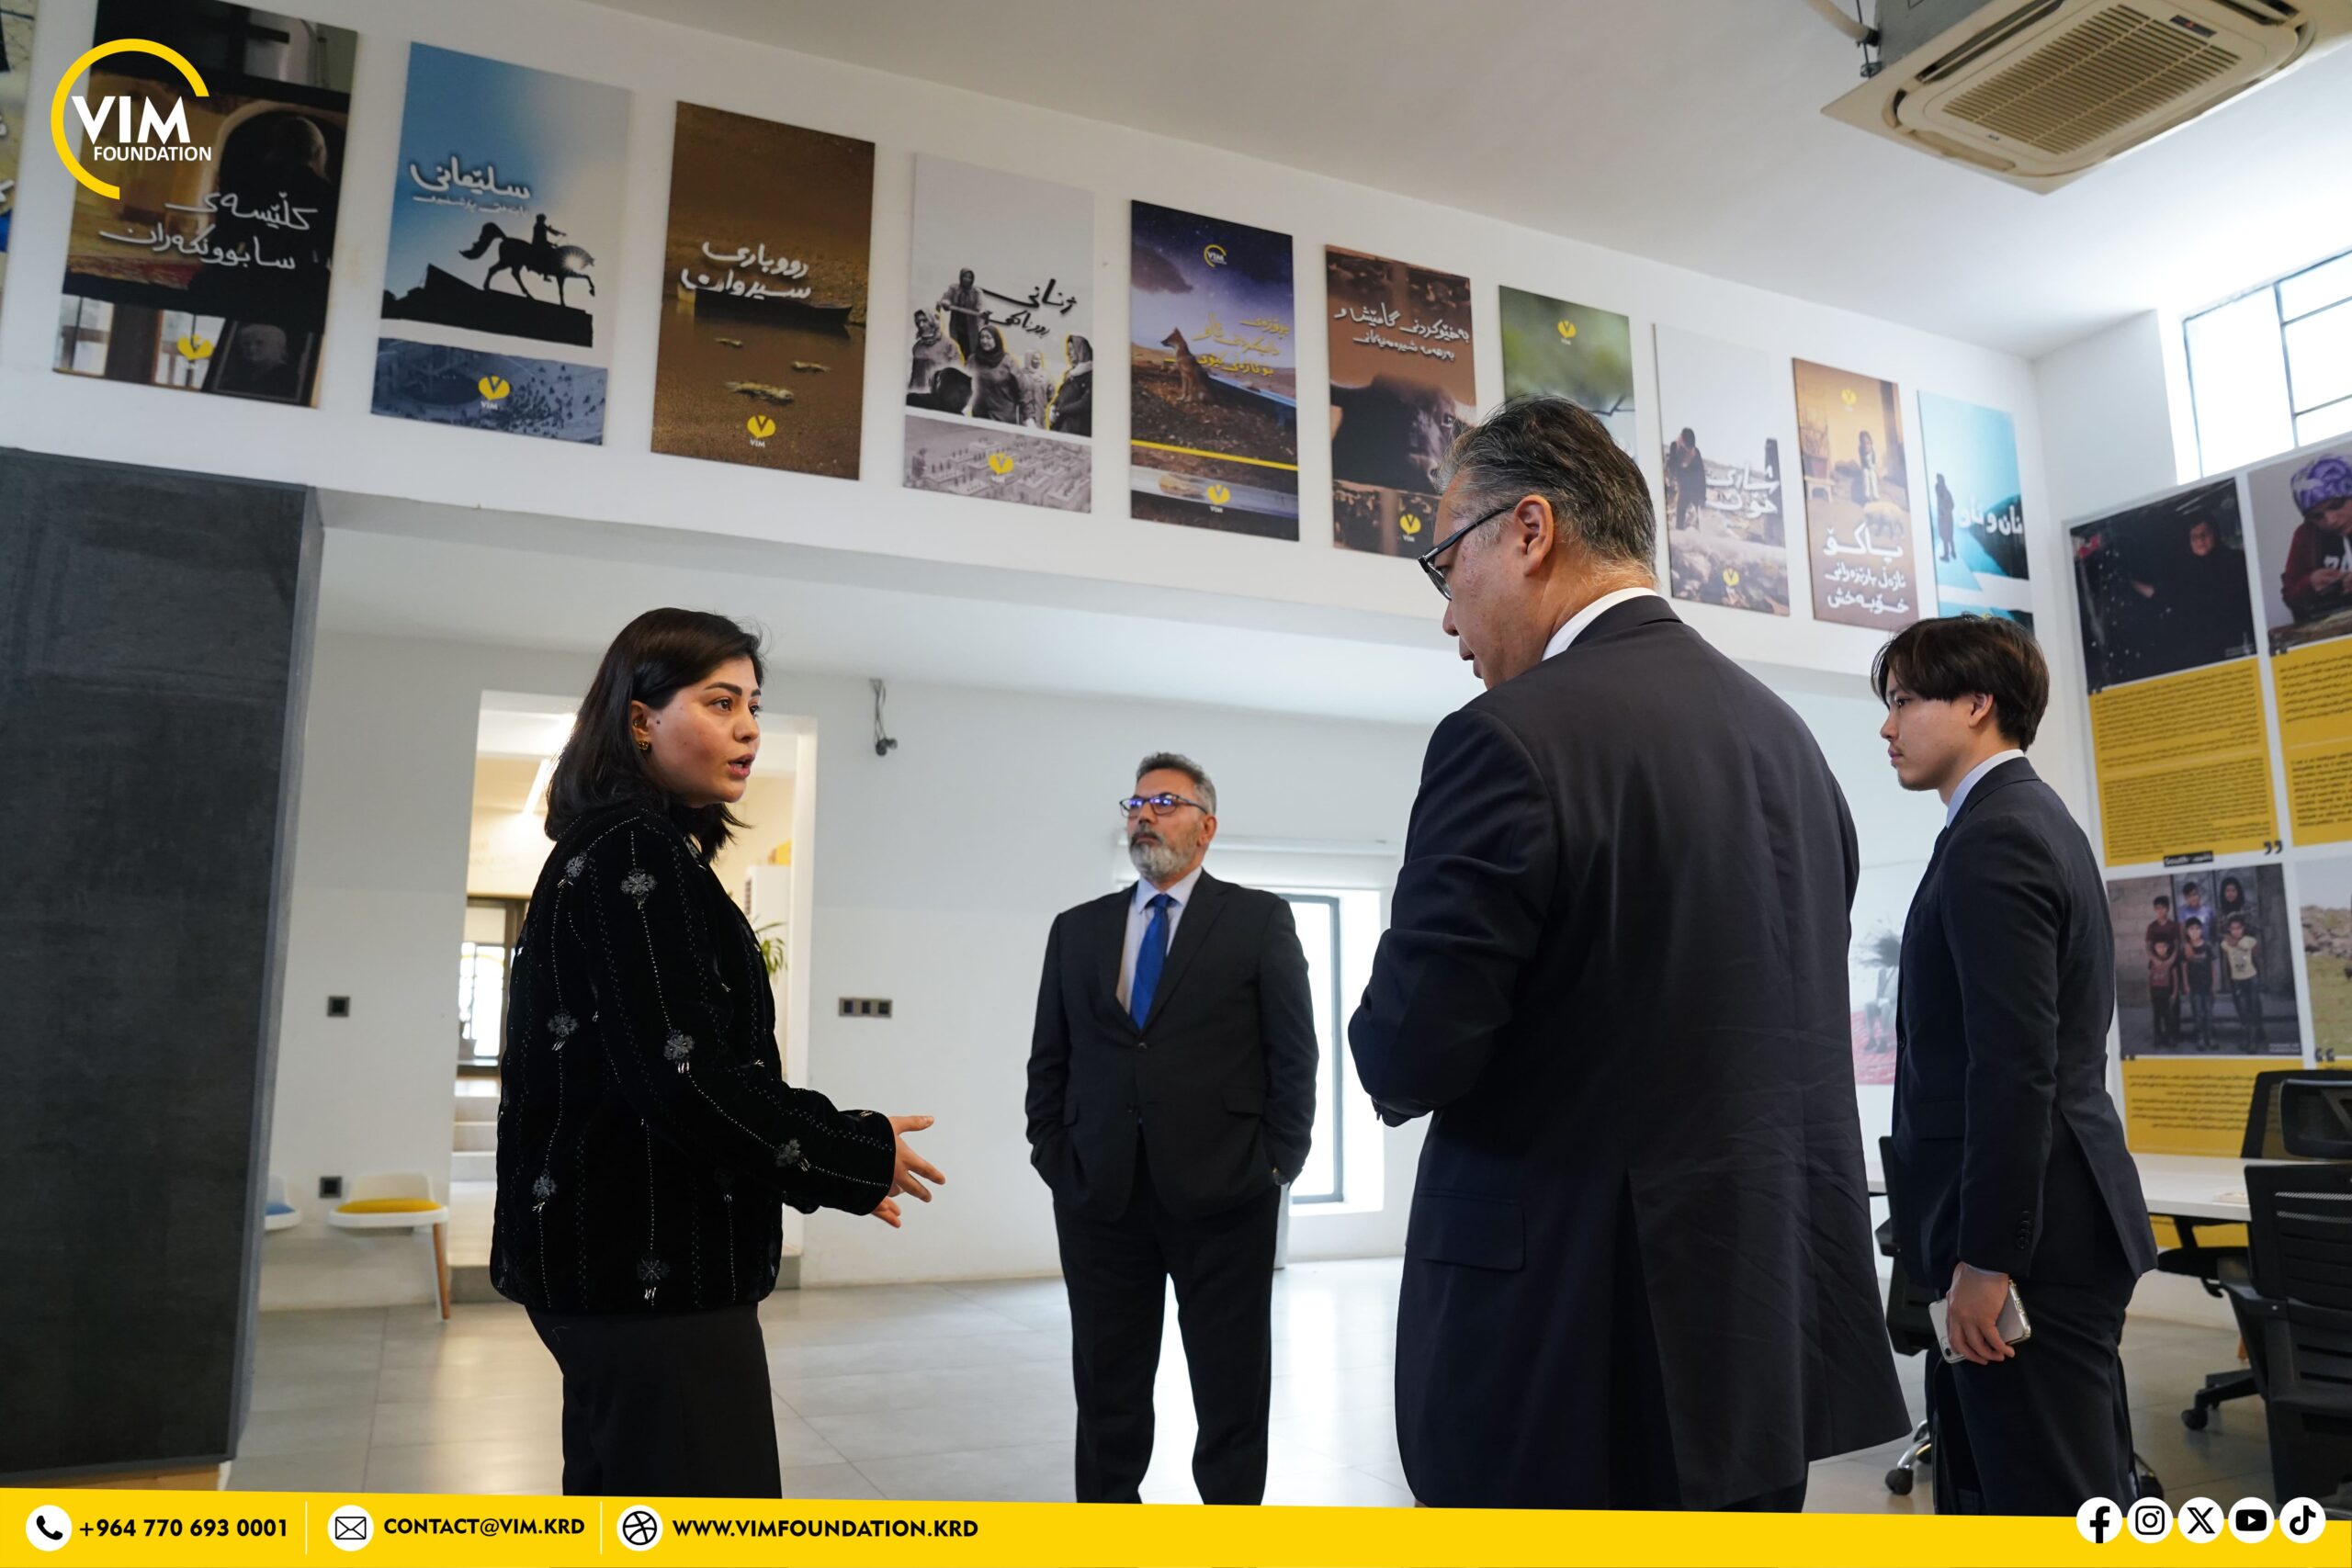 The Japanese Ambassador’s Visit to Vim Foundation